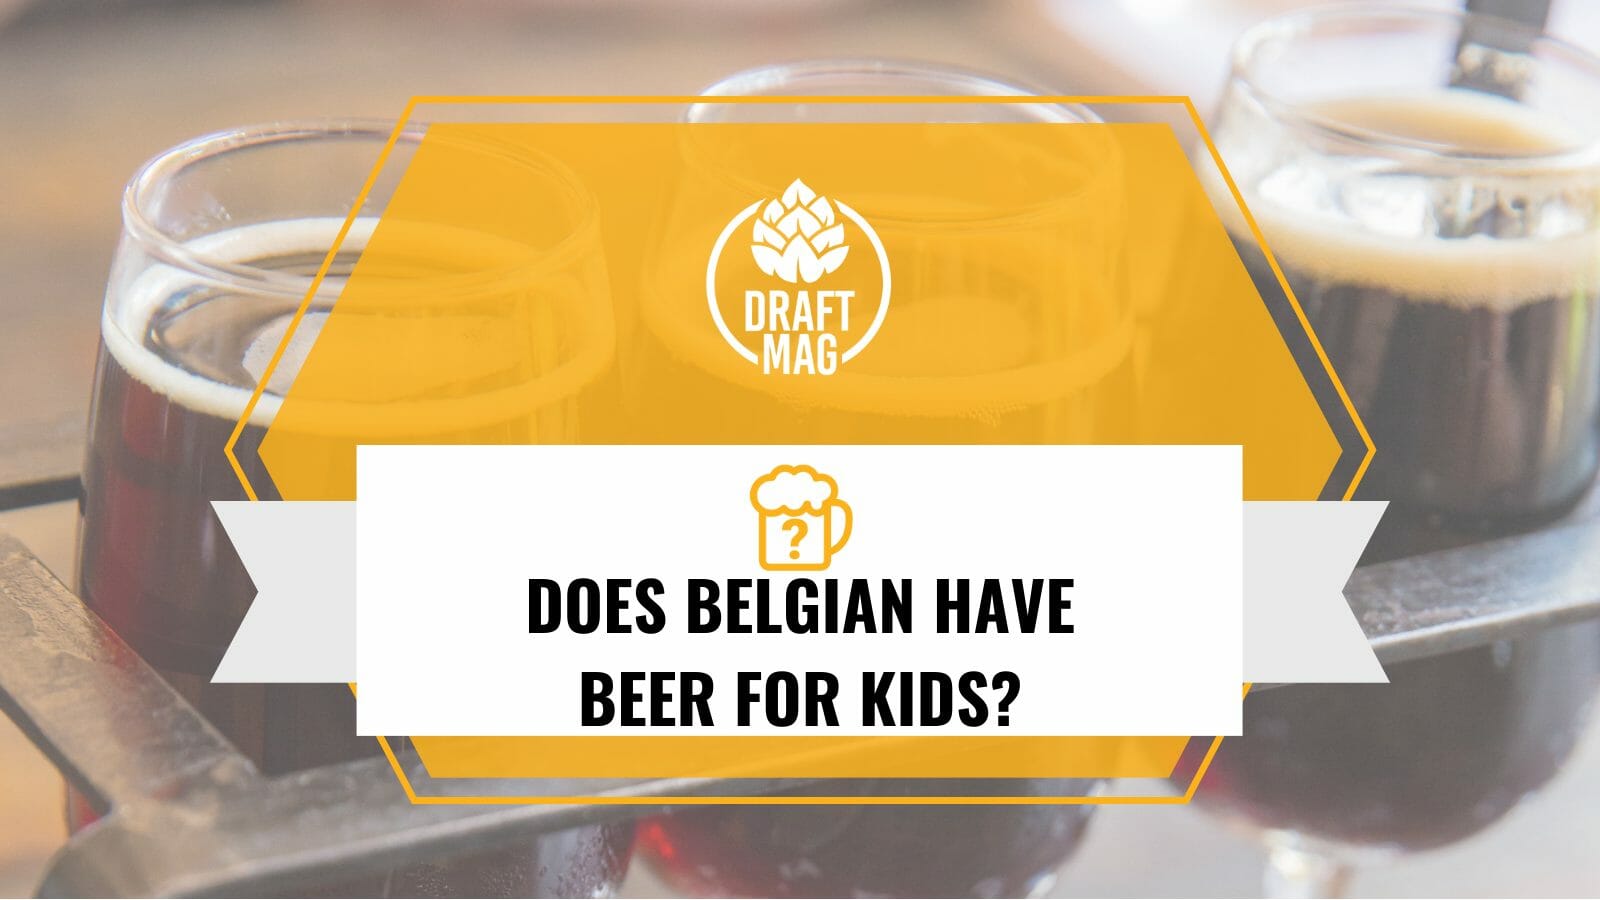 Belgian have beer for kids